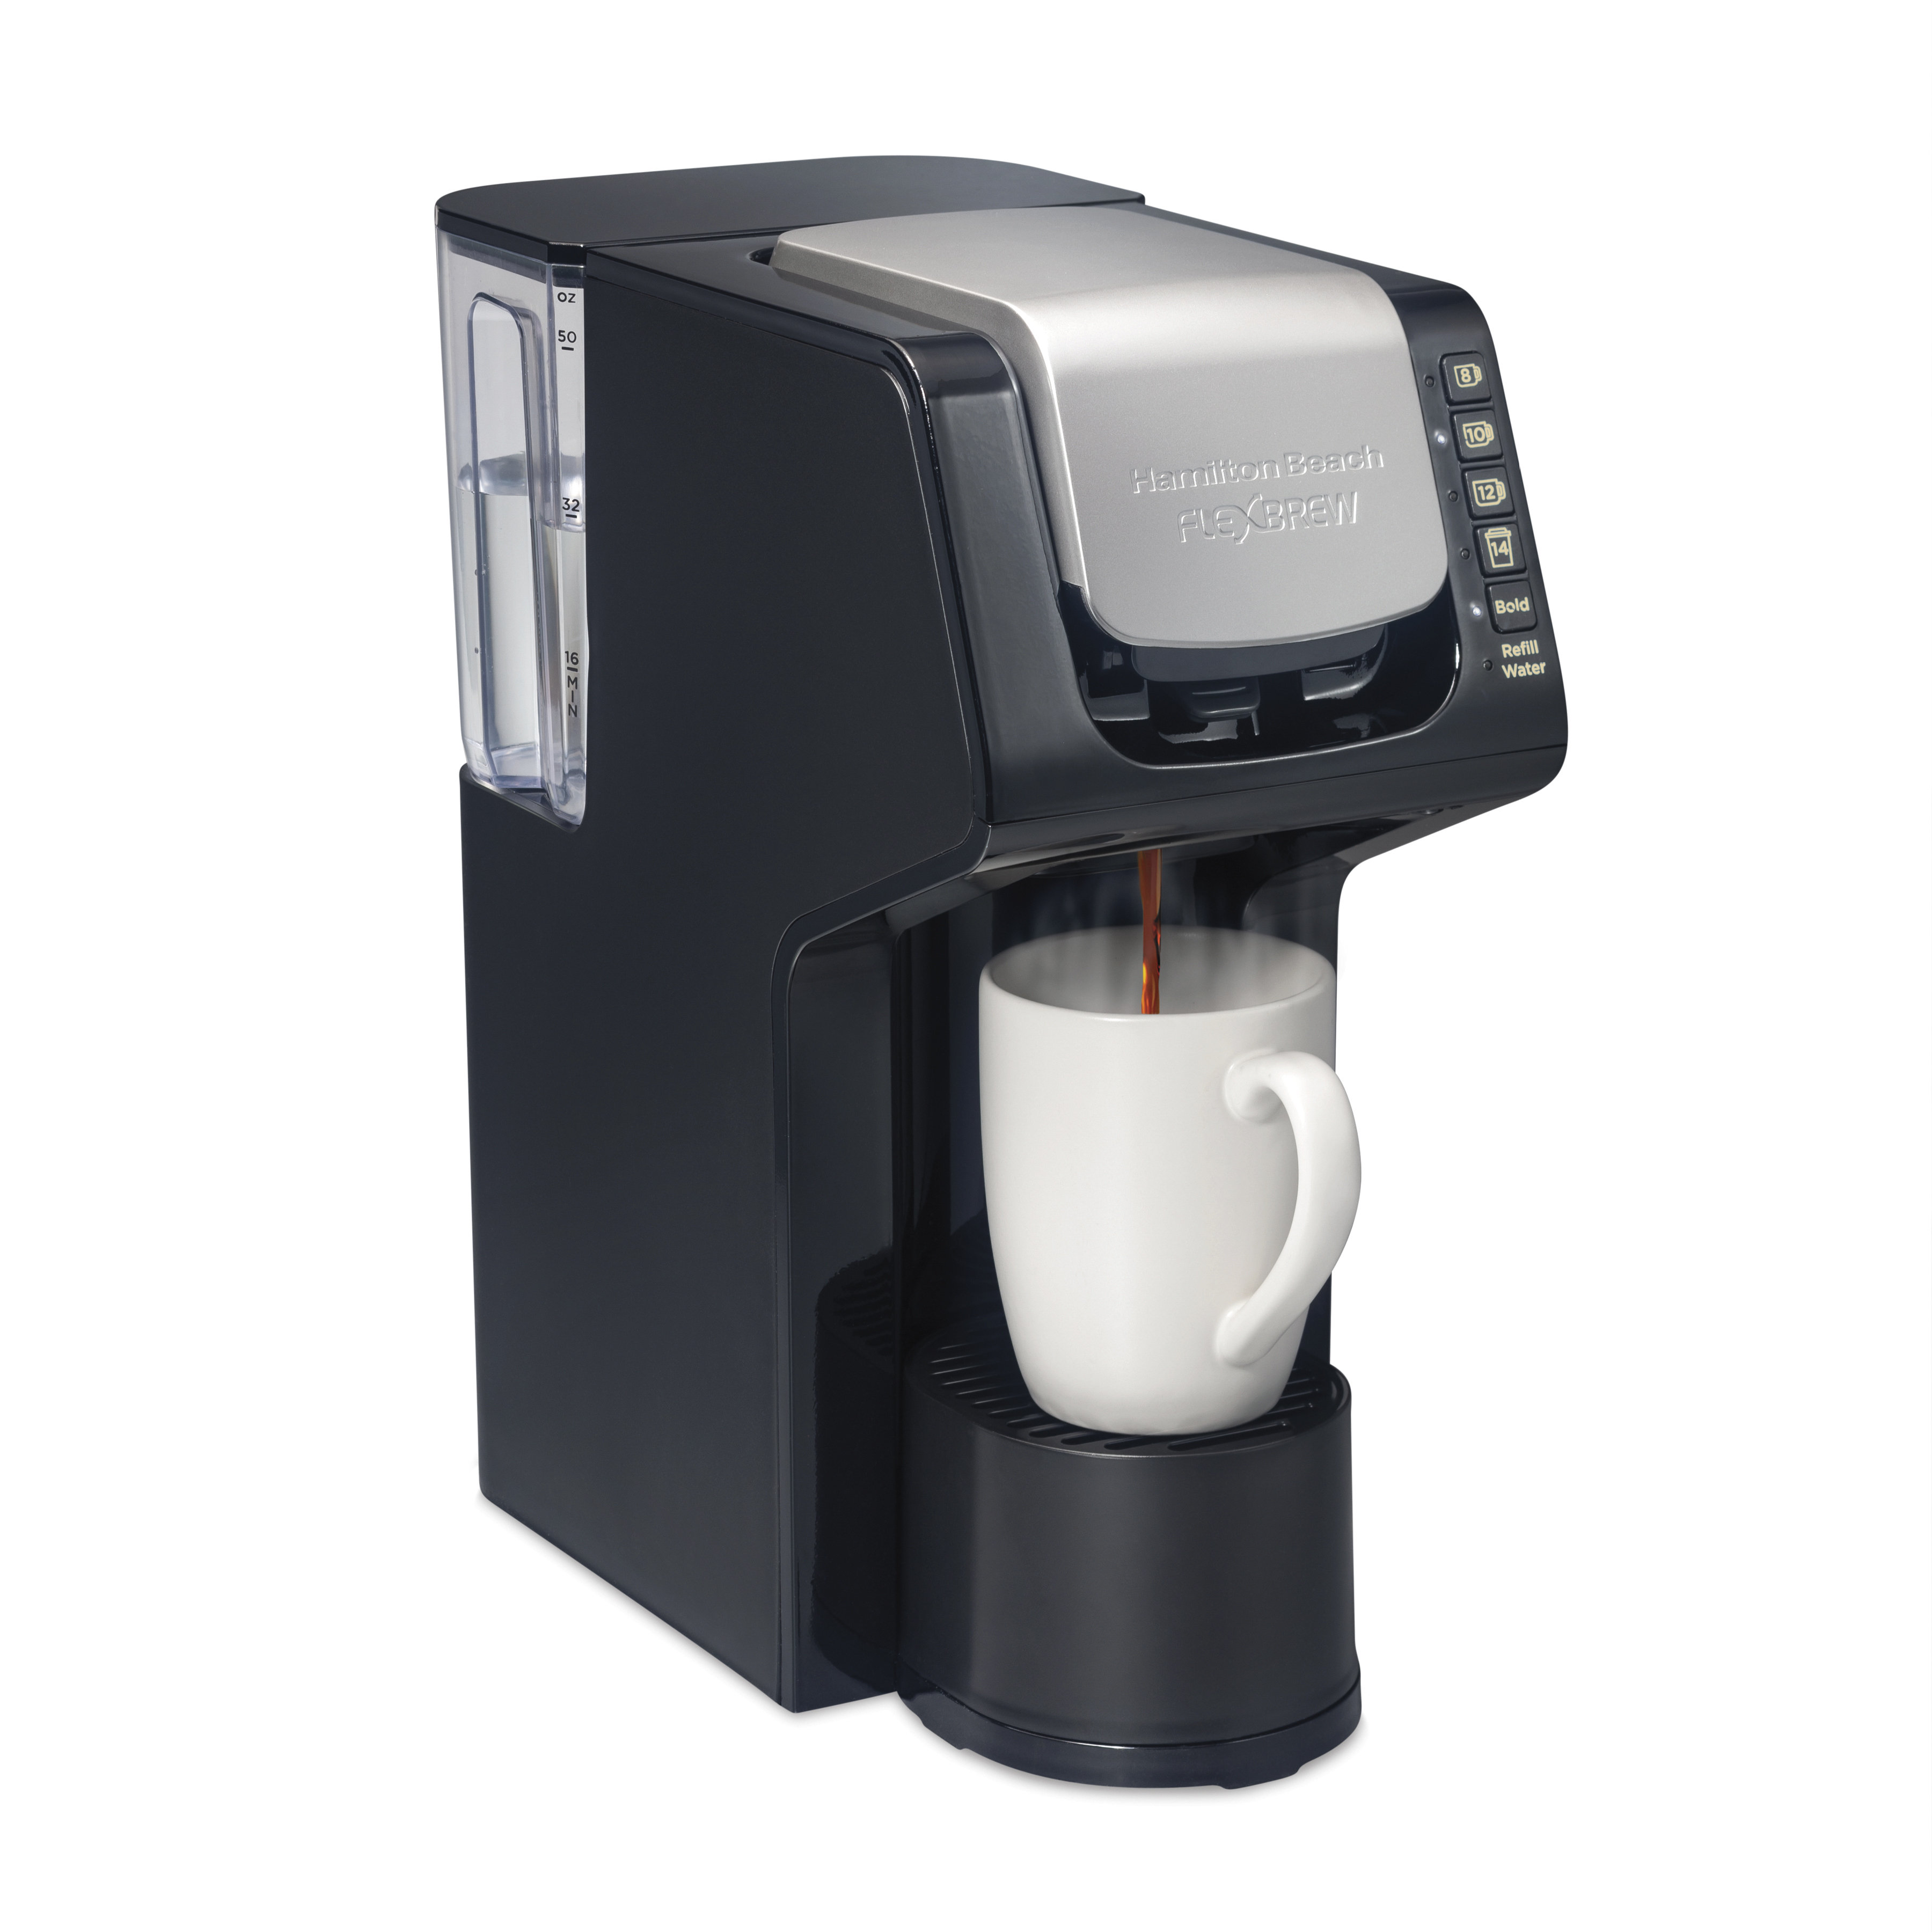 Coffee Makers: Single-Serve & Drip Coffee Machines